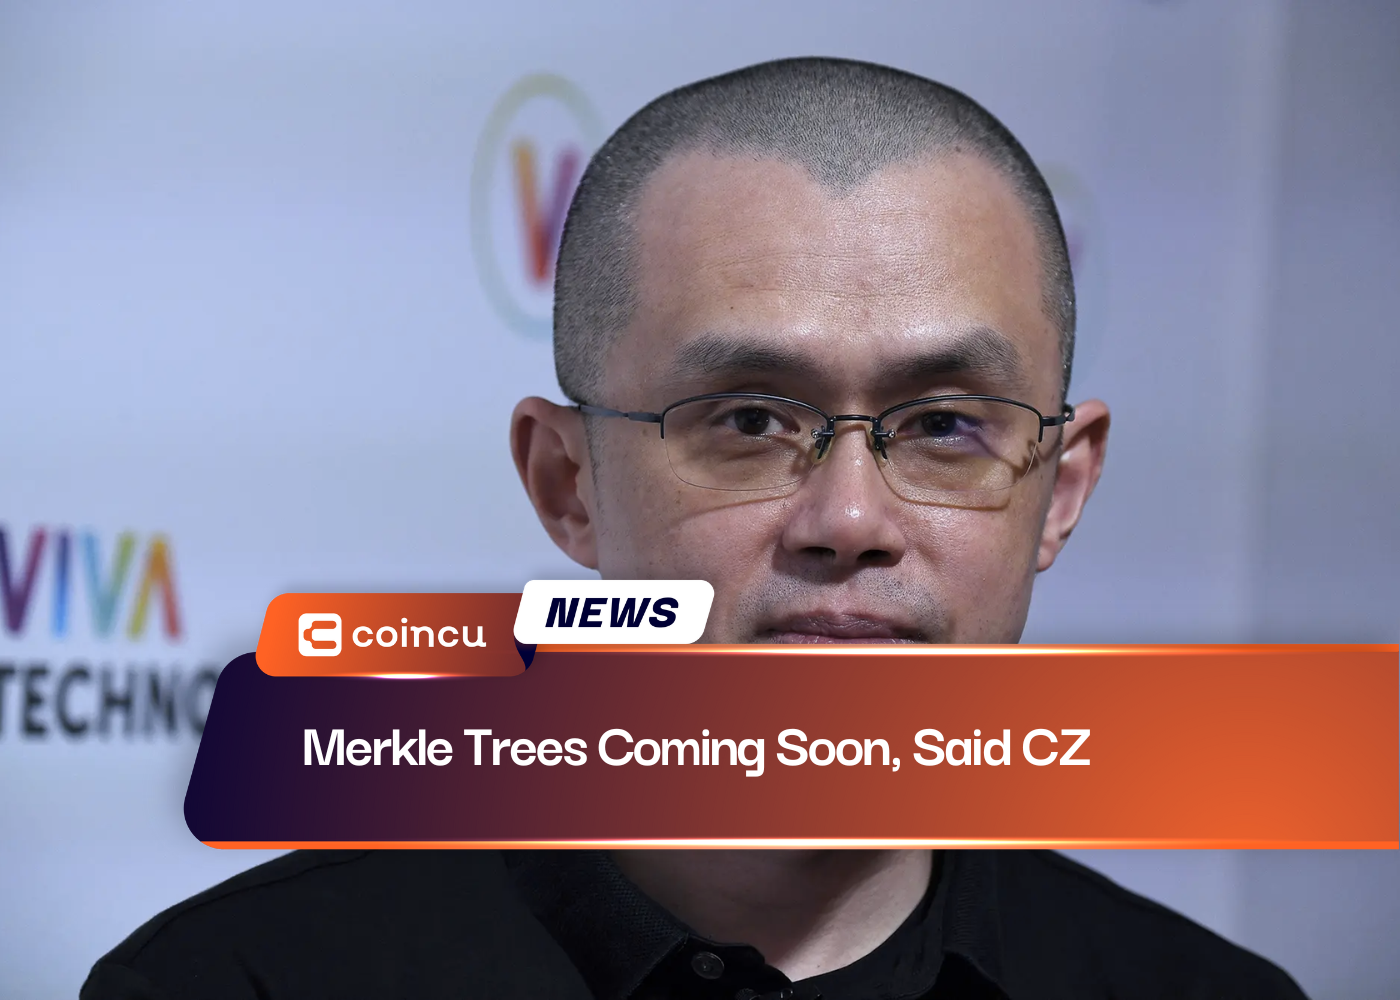 Merkle Trees Coming Soon, Said CZ